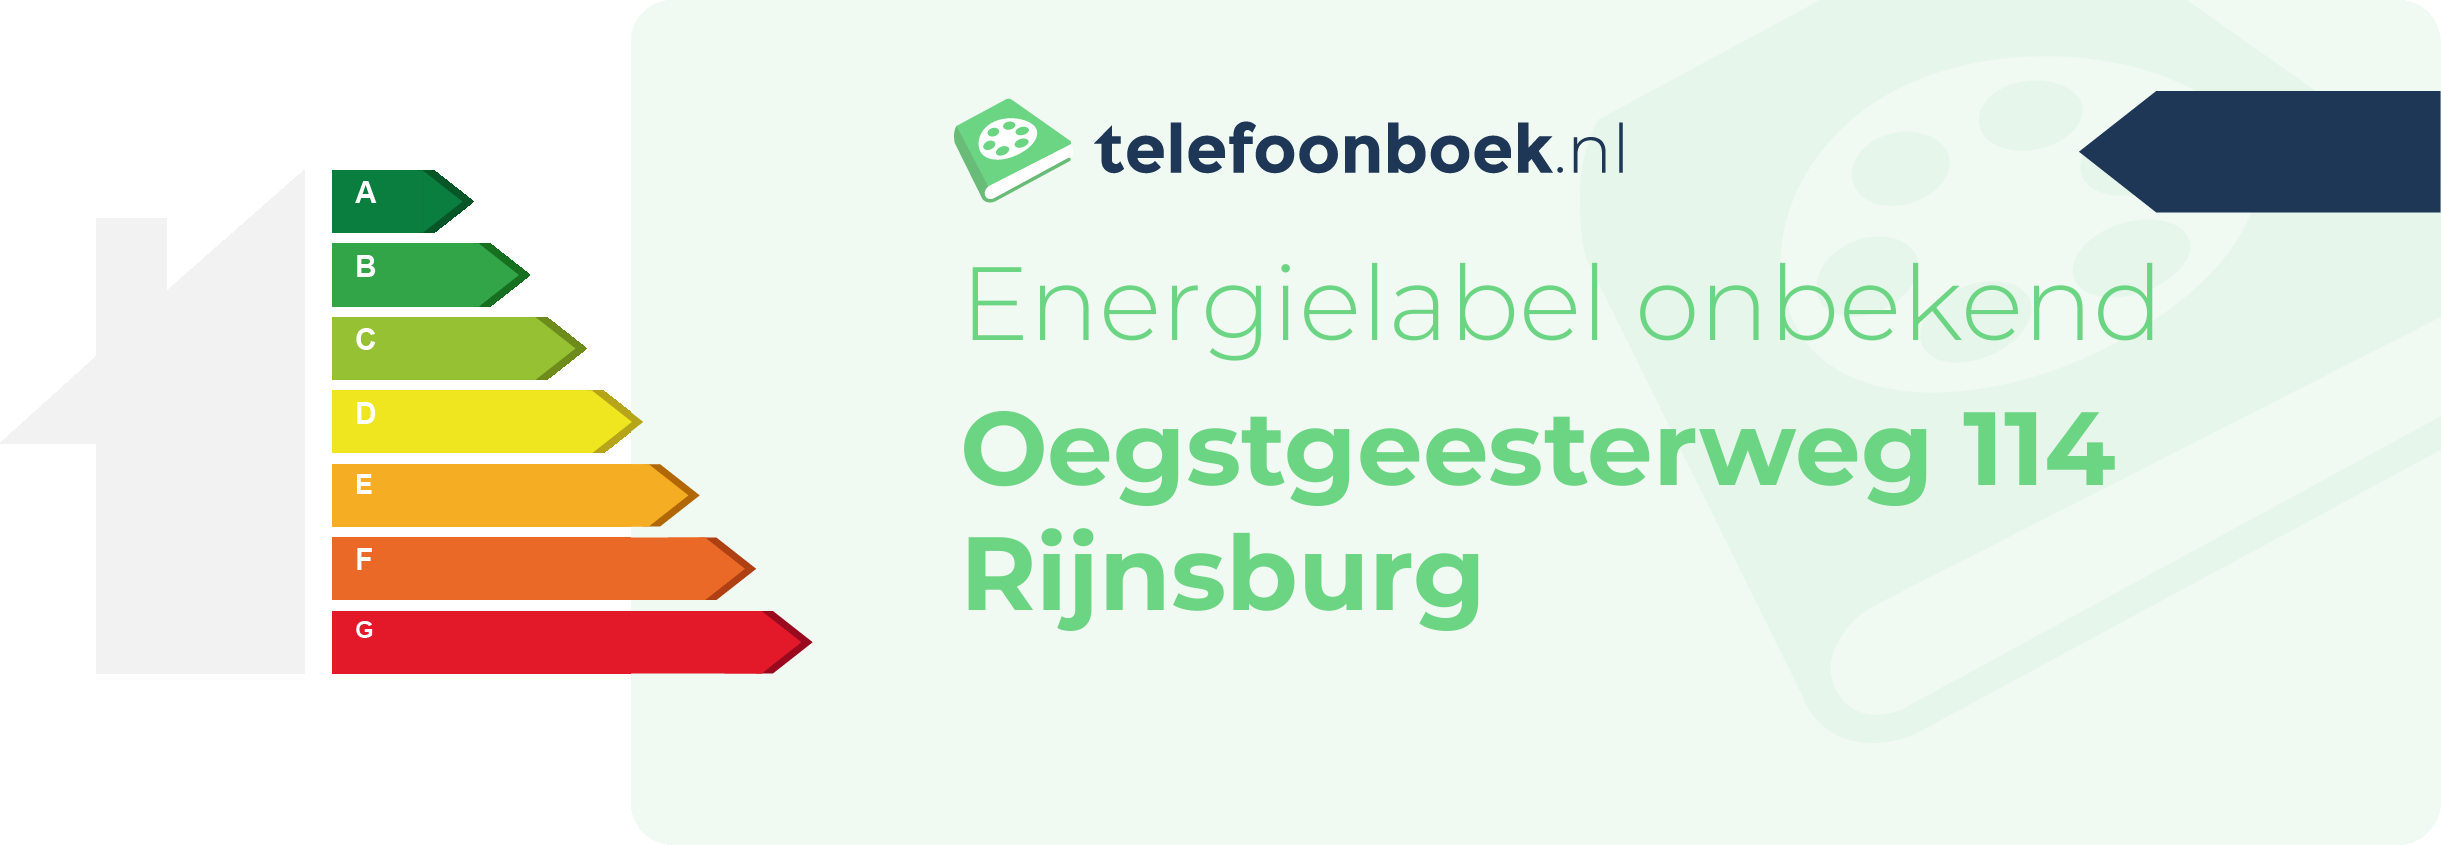 Energielabel Oegstgeesterweg 114 Rijnsburg